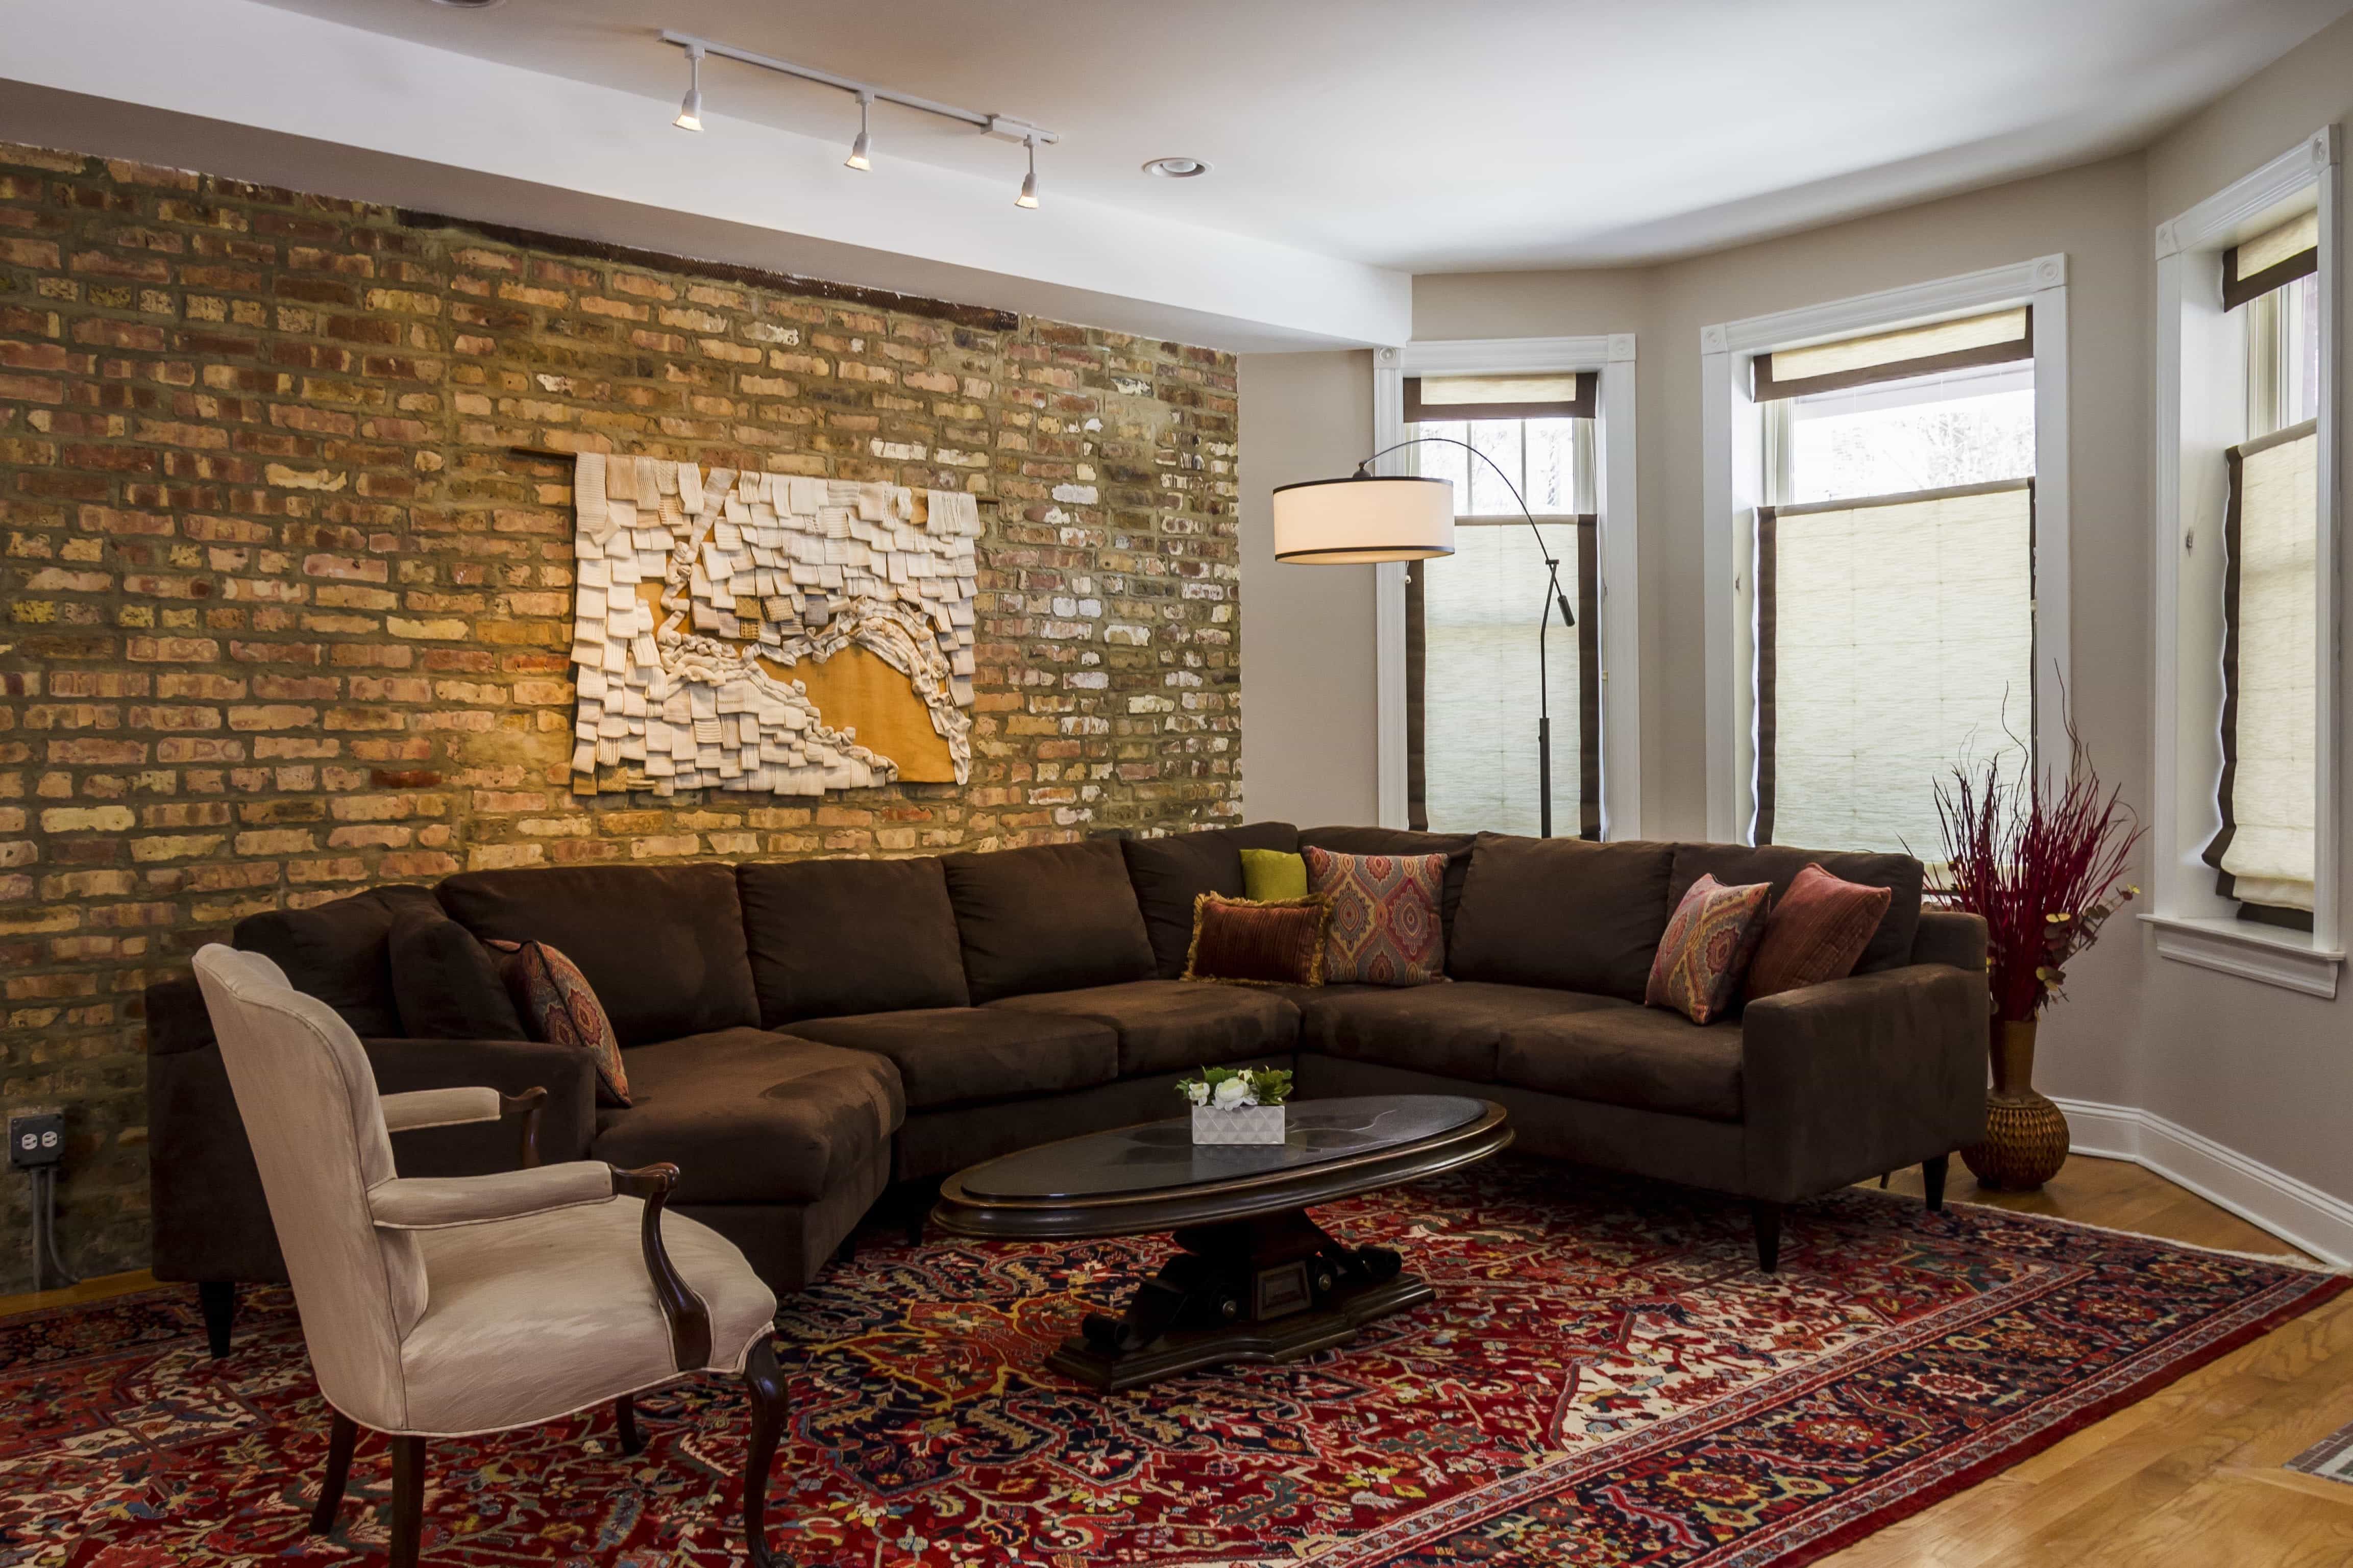 Decorative Brick Wall Design For Your Interior 23735 Interior Ideas